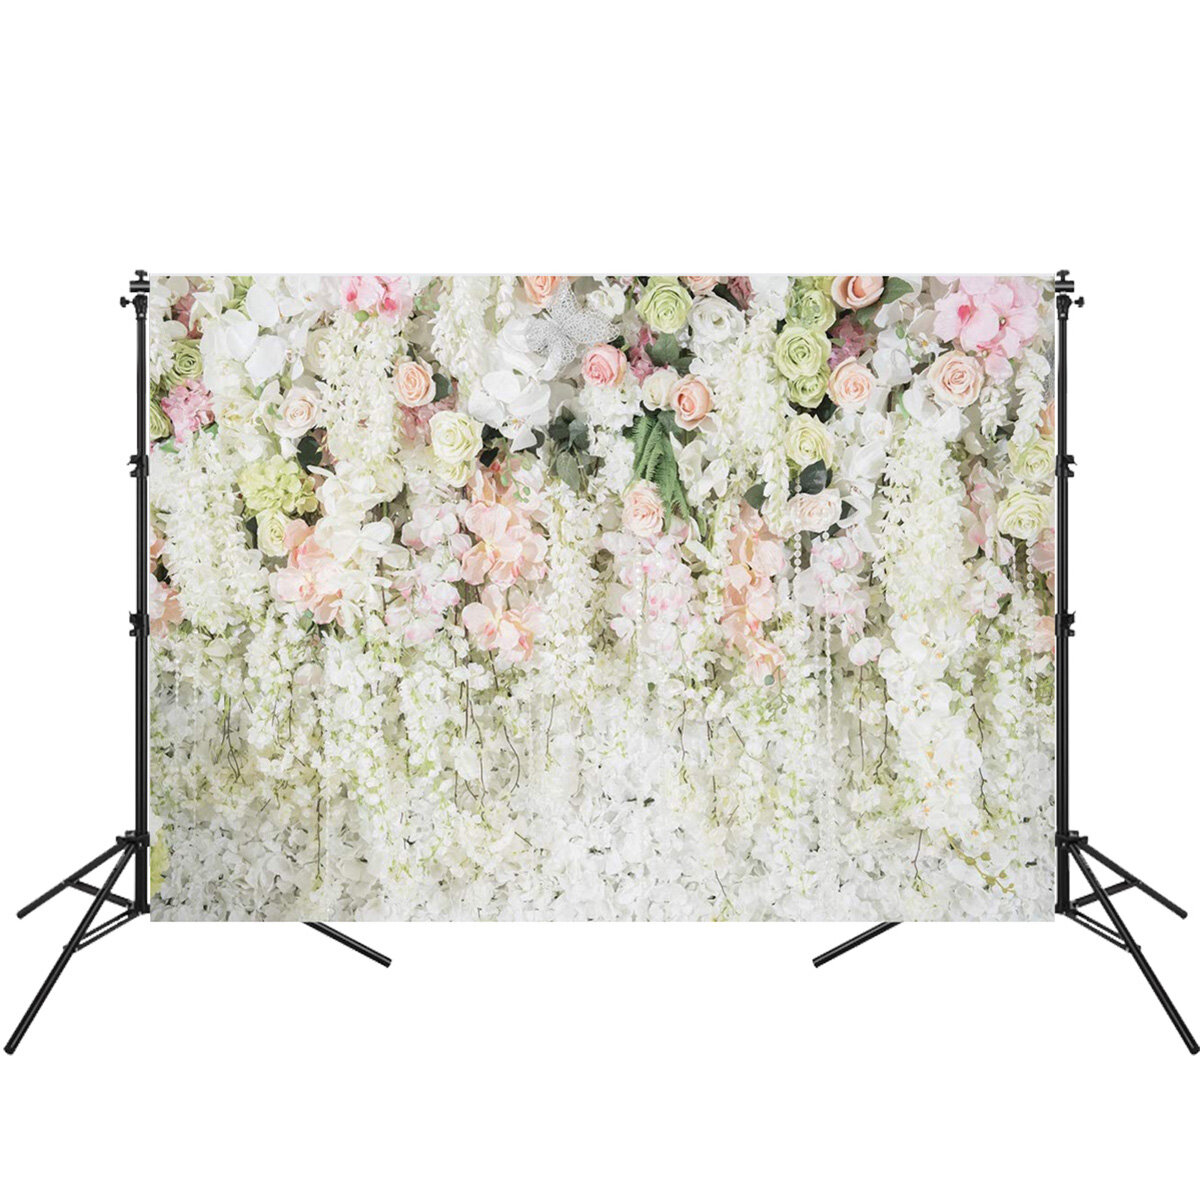 09x15m 15x21m 18x27m White Flowers Sea Photography Studio Wall Backdrop Photo Background Cloth for Birthday Weddin